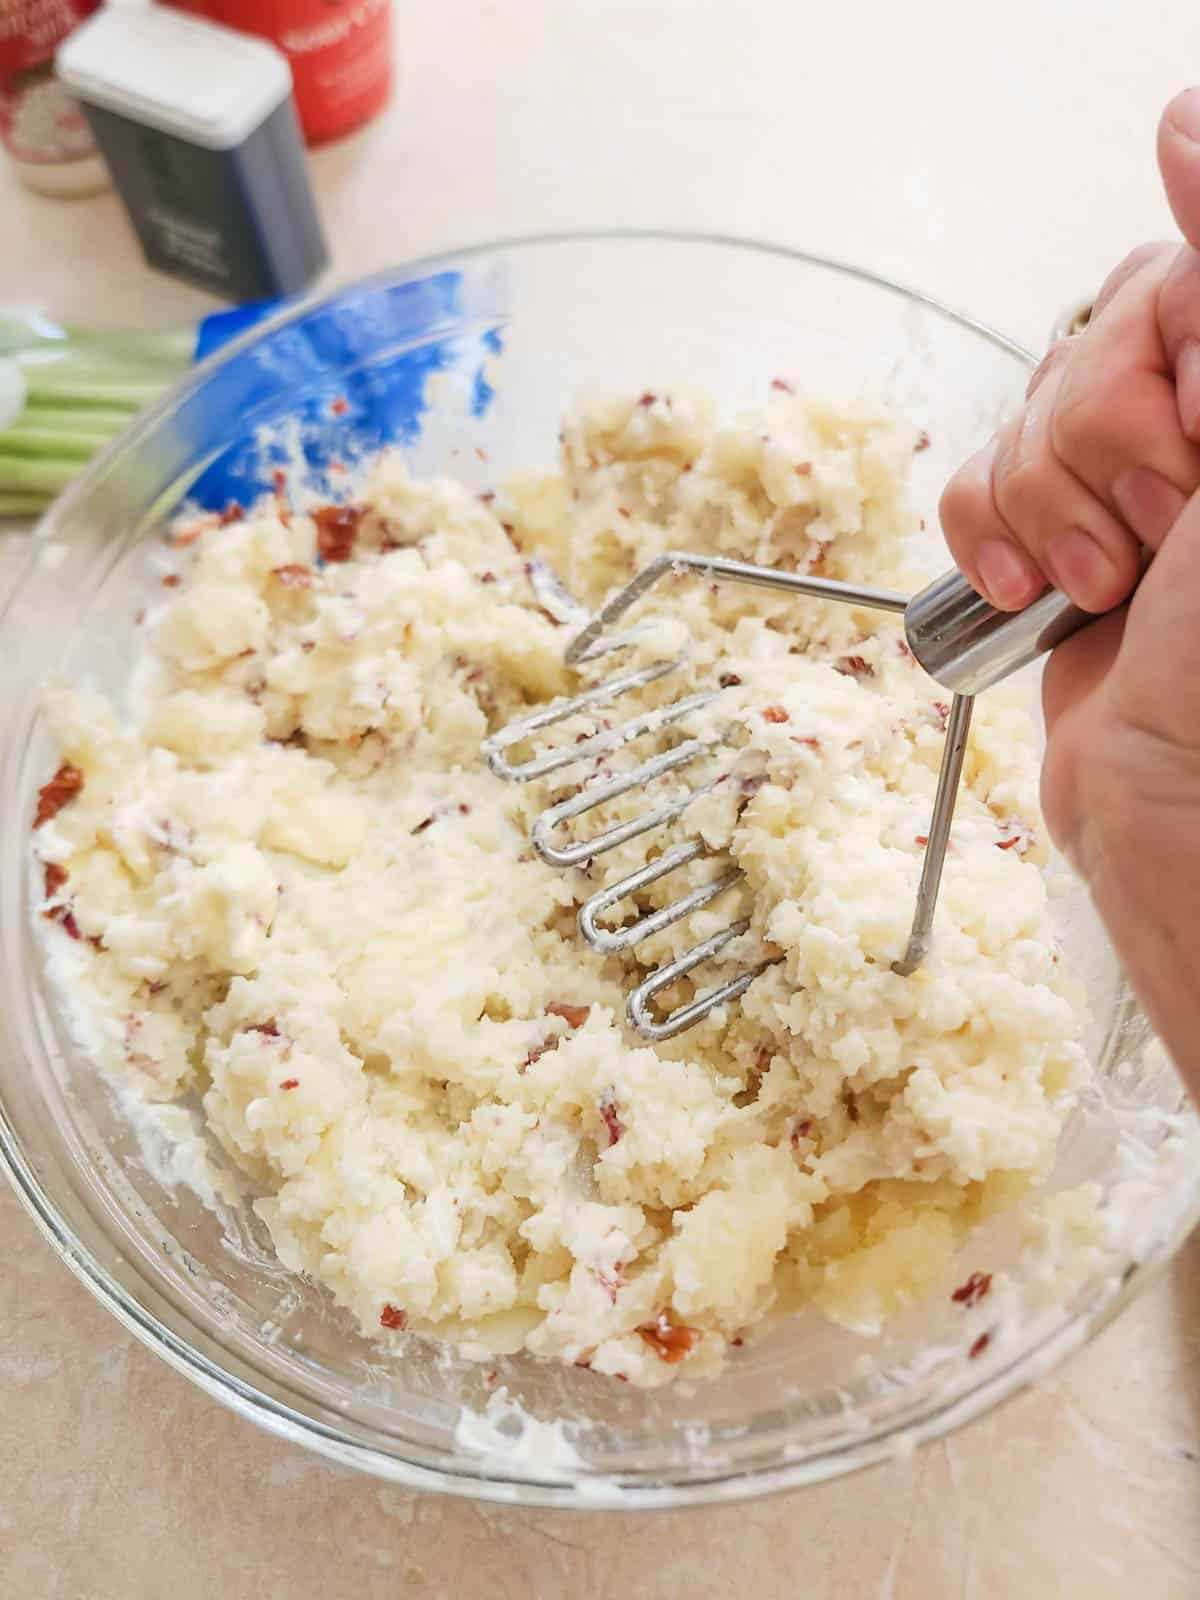 mashing potato mixture with a potato masher